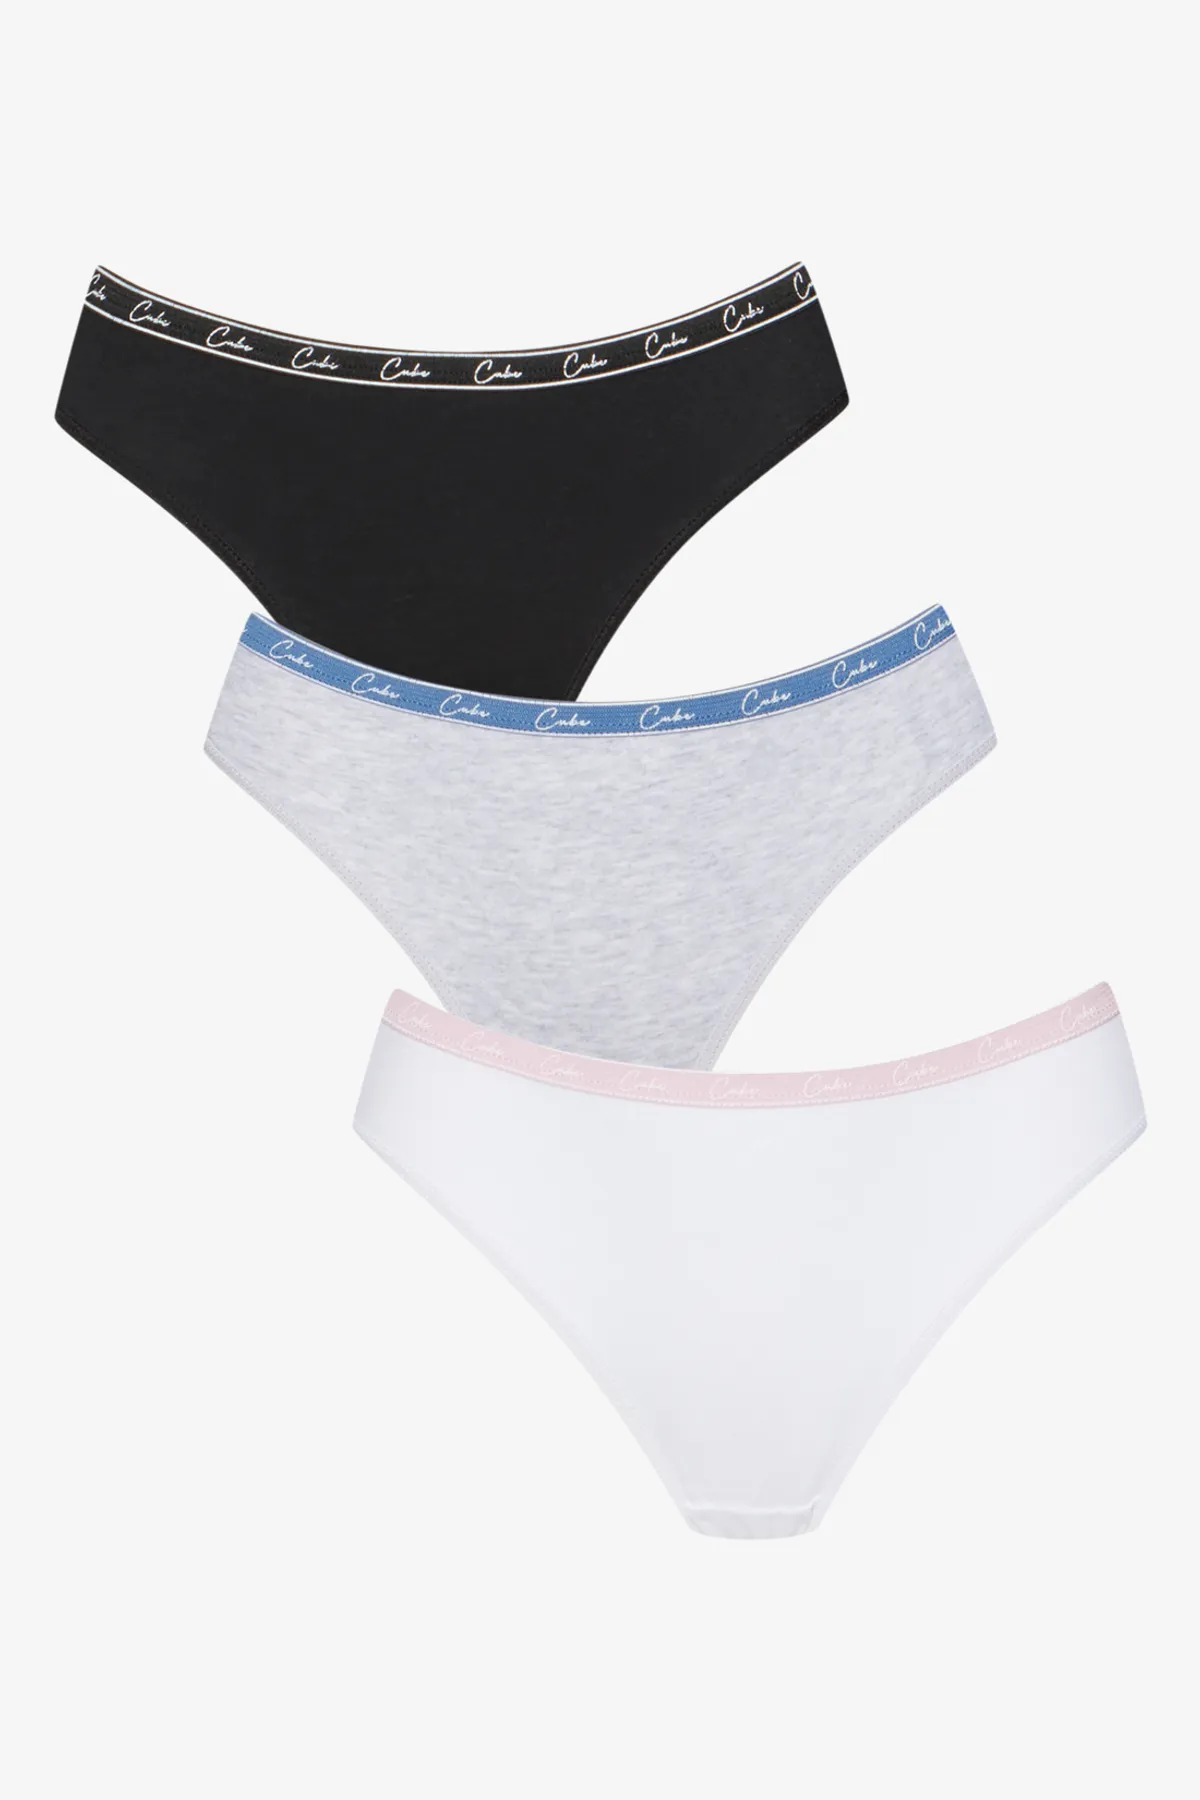 CALVIN KLEIN BIKINI 3 Pack Underwear - White Multi